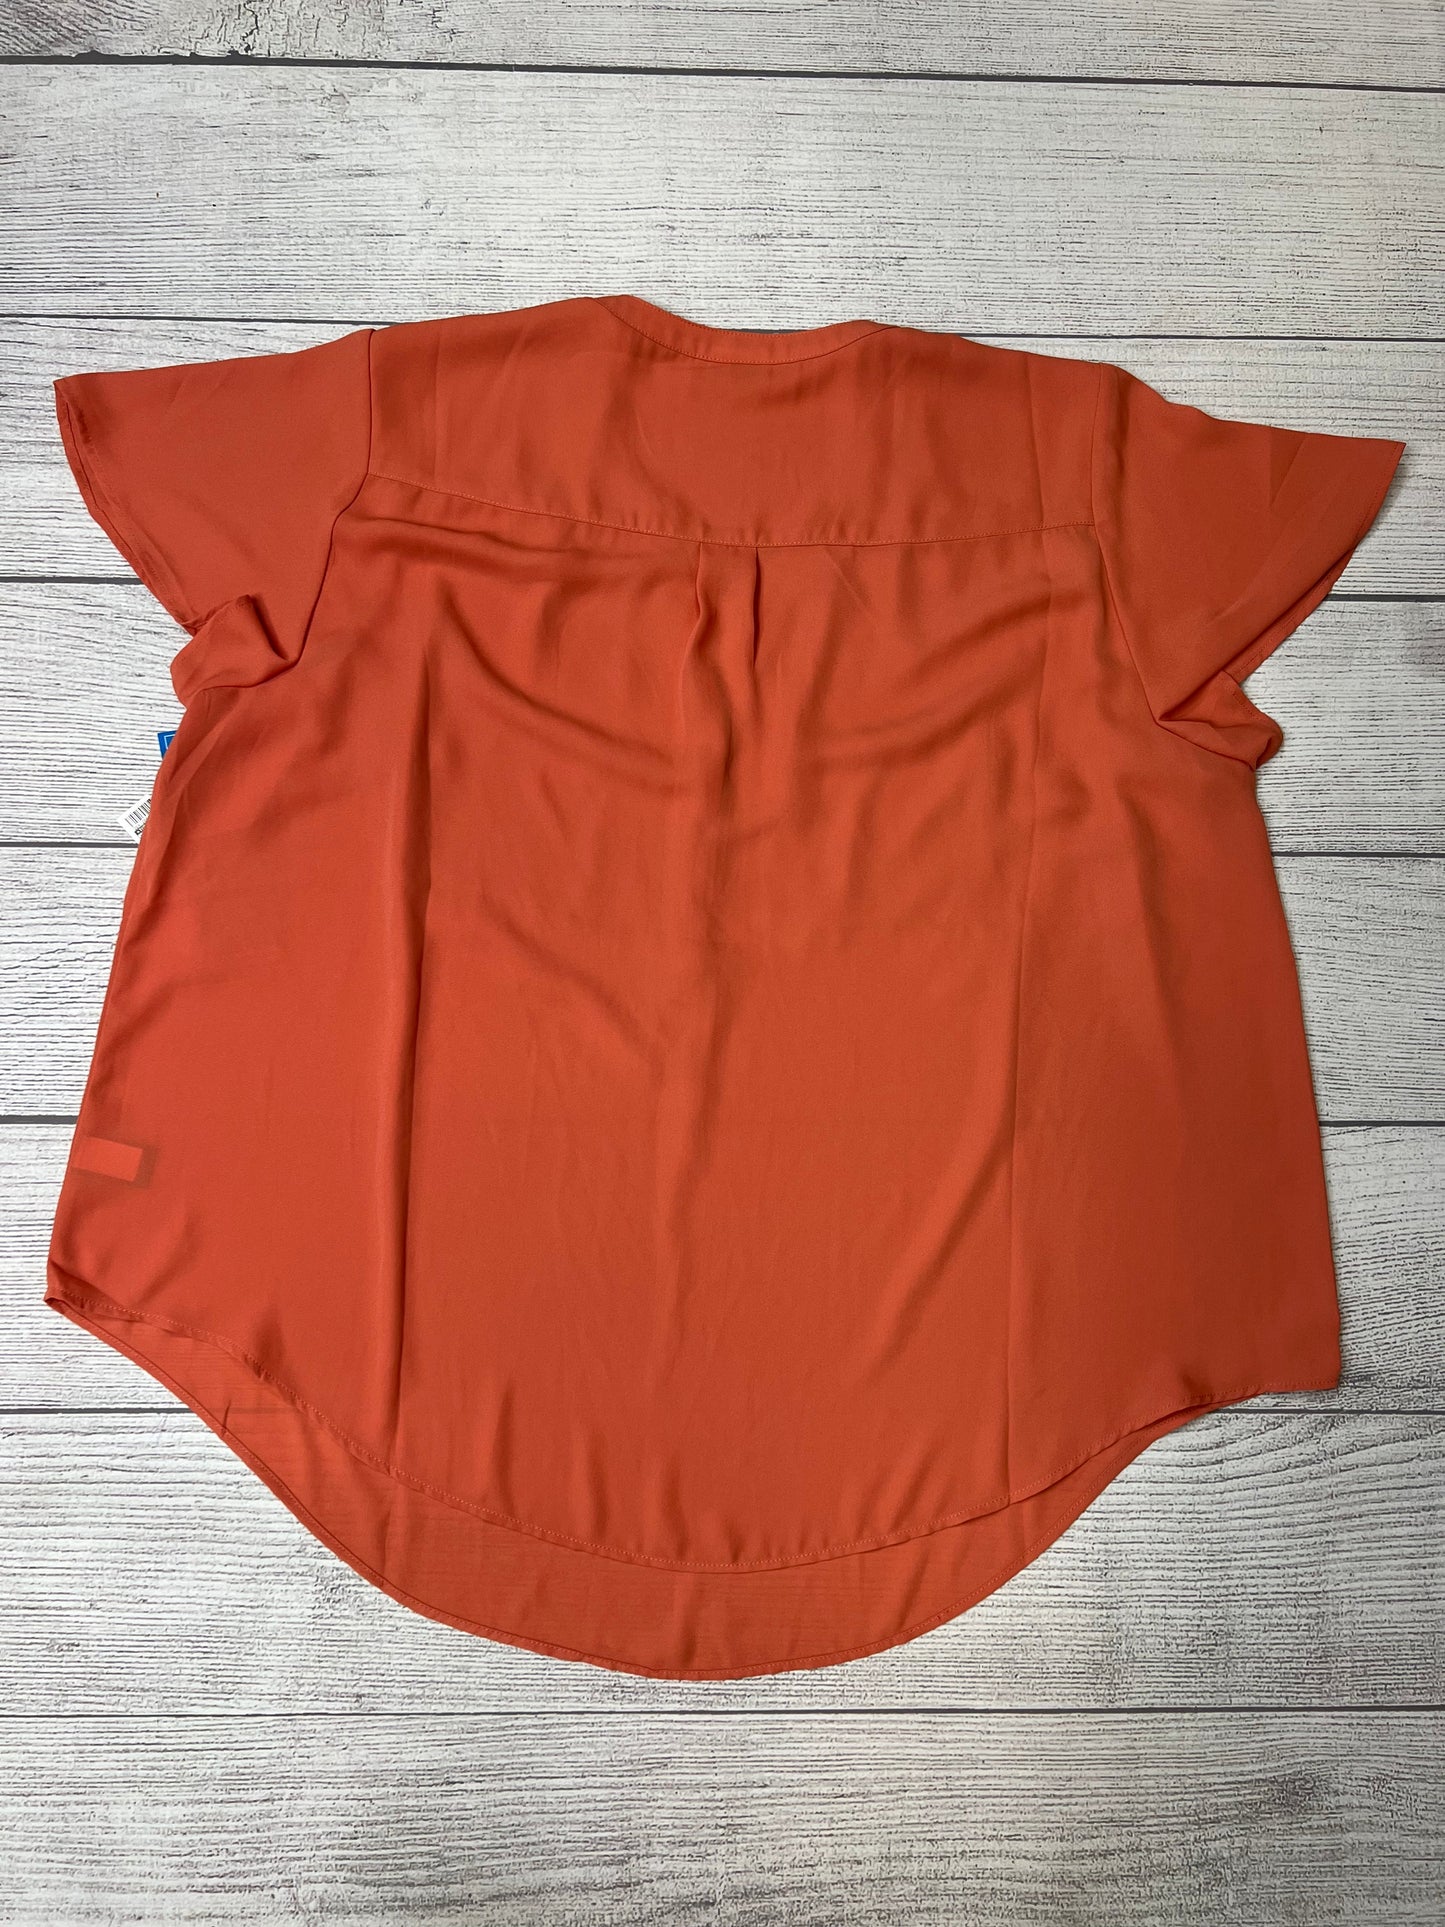 Orange Top Short Sleeve Torrid, Size 3x